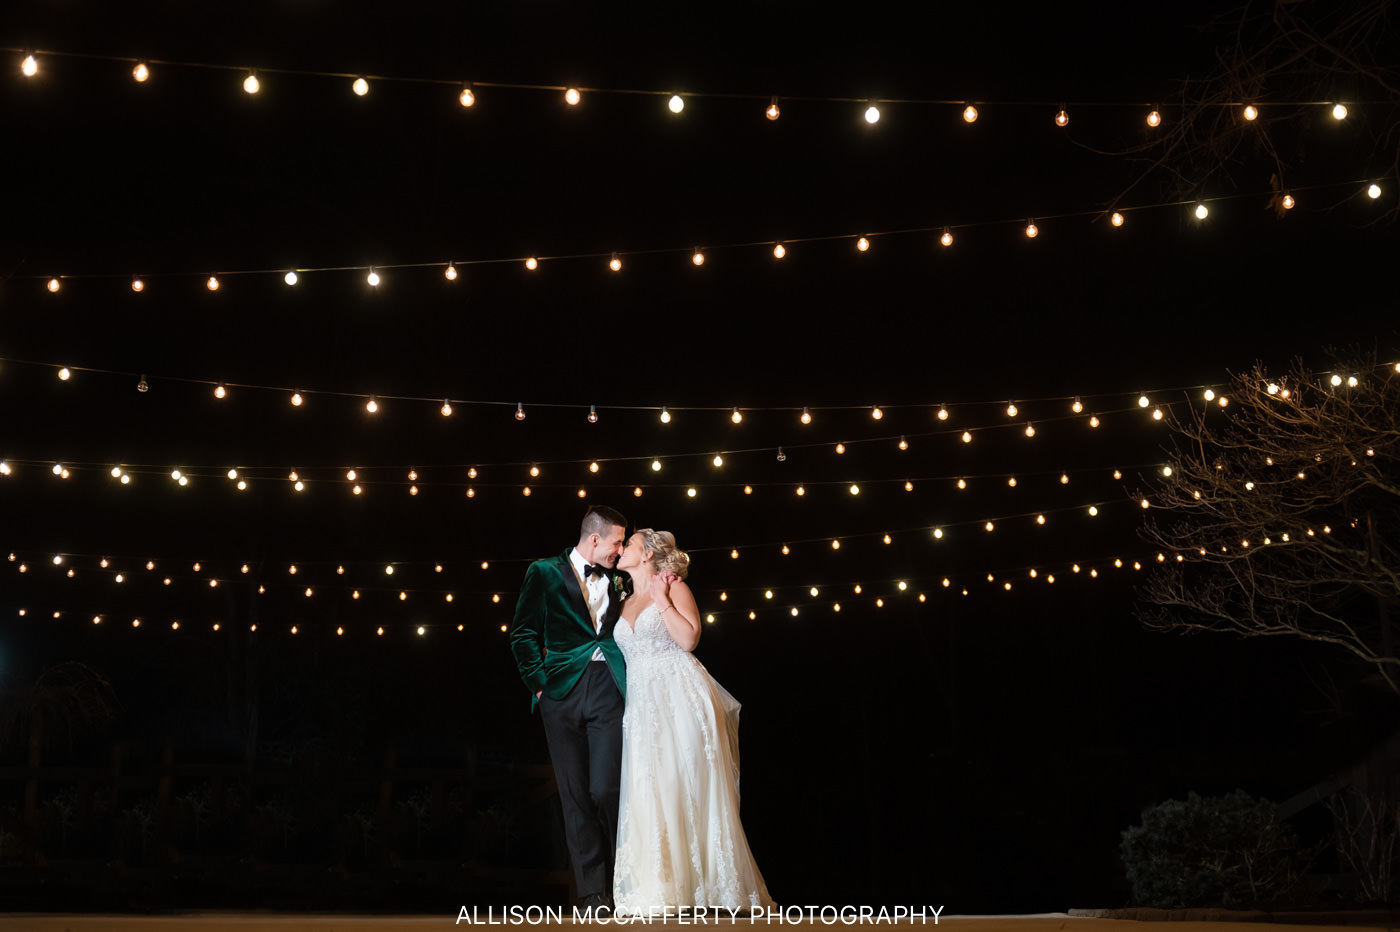 Wedding Photo Done Under String Lights at Hamilton Manor